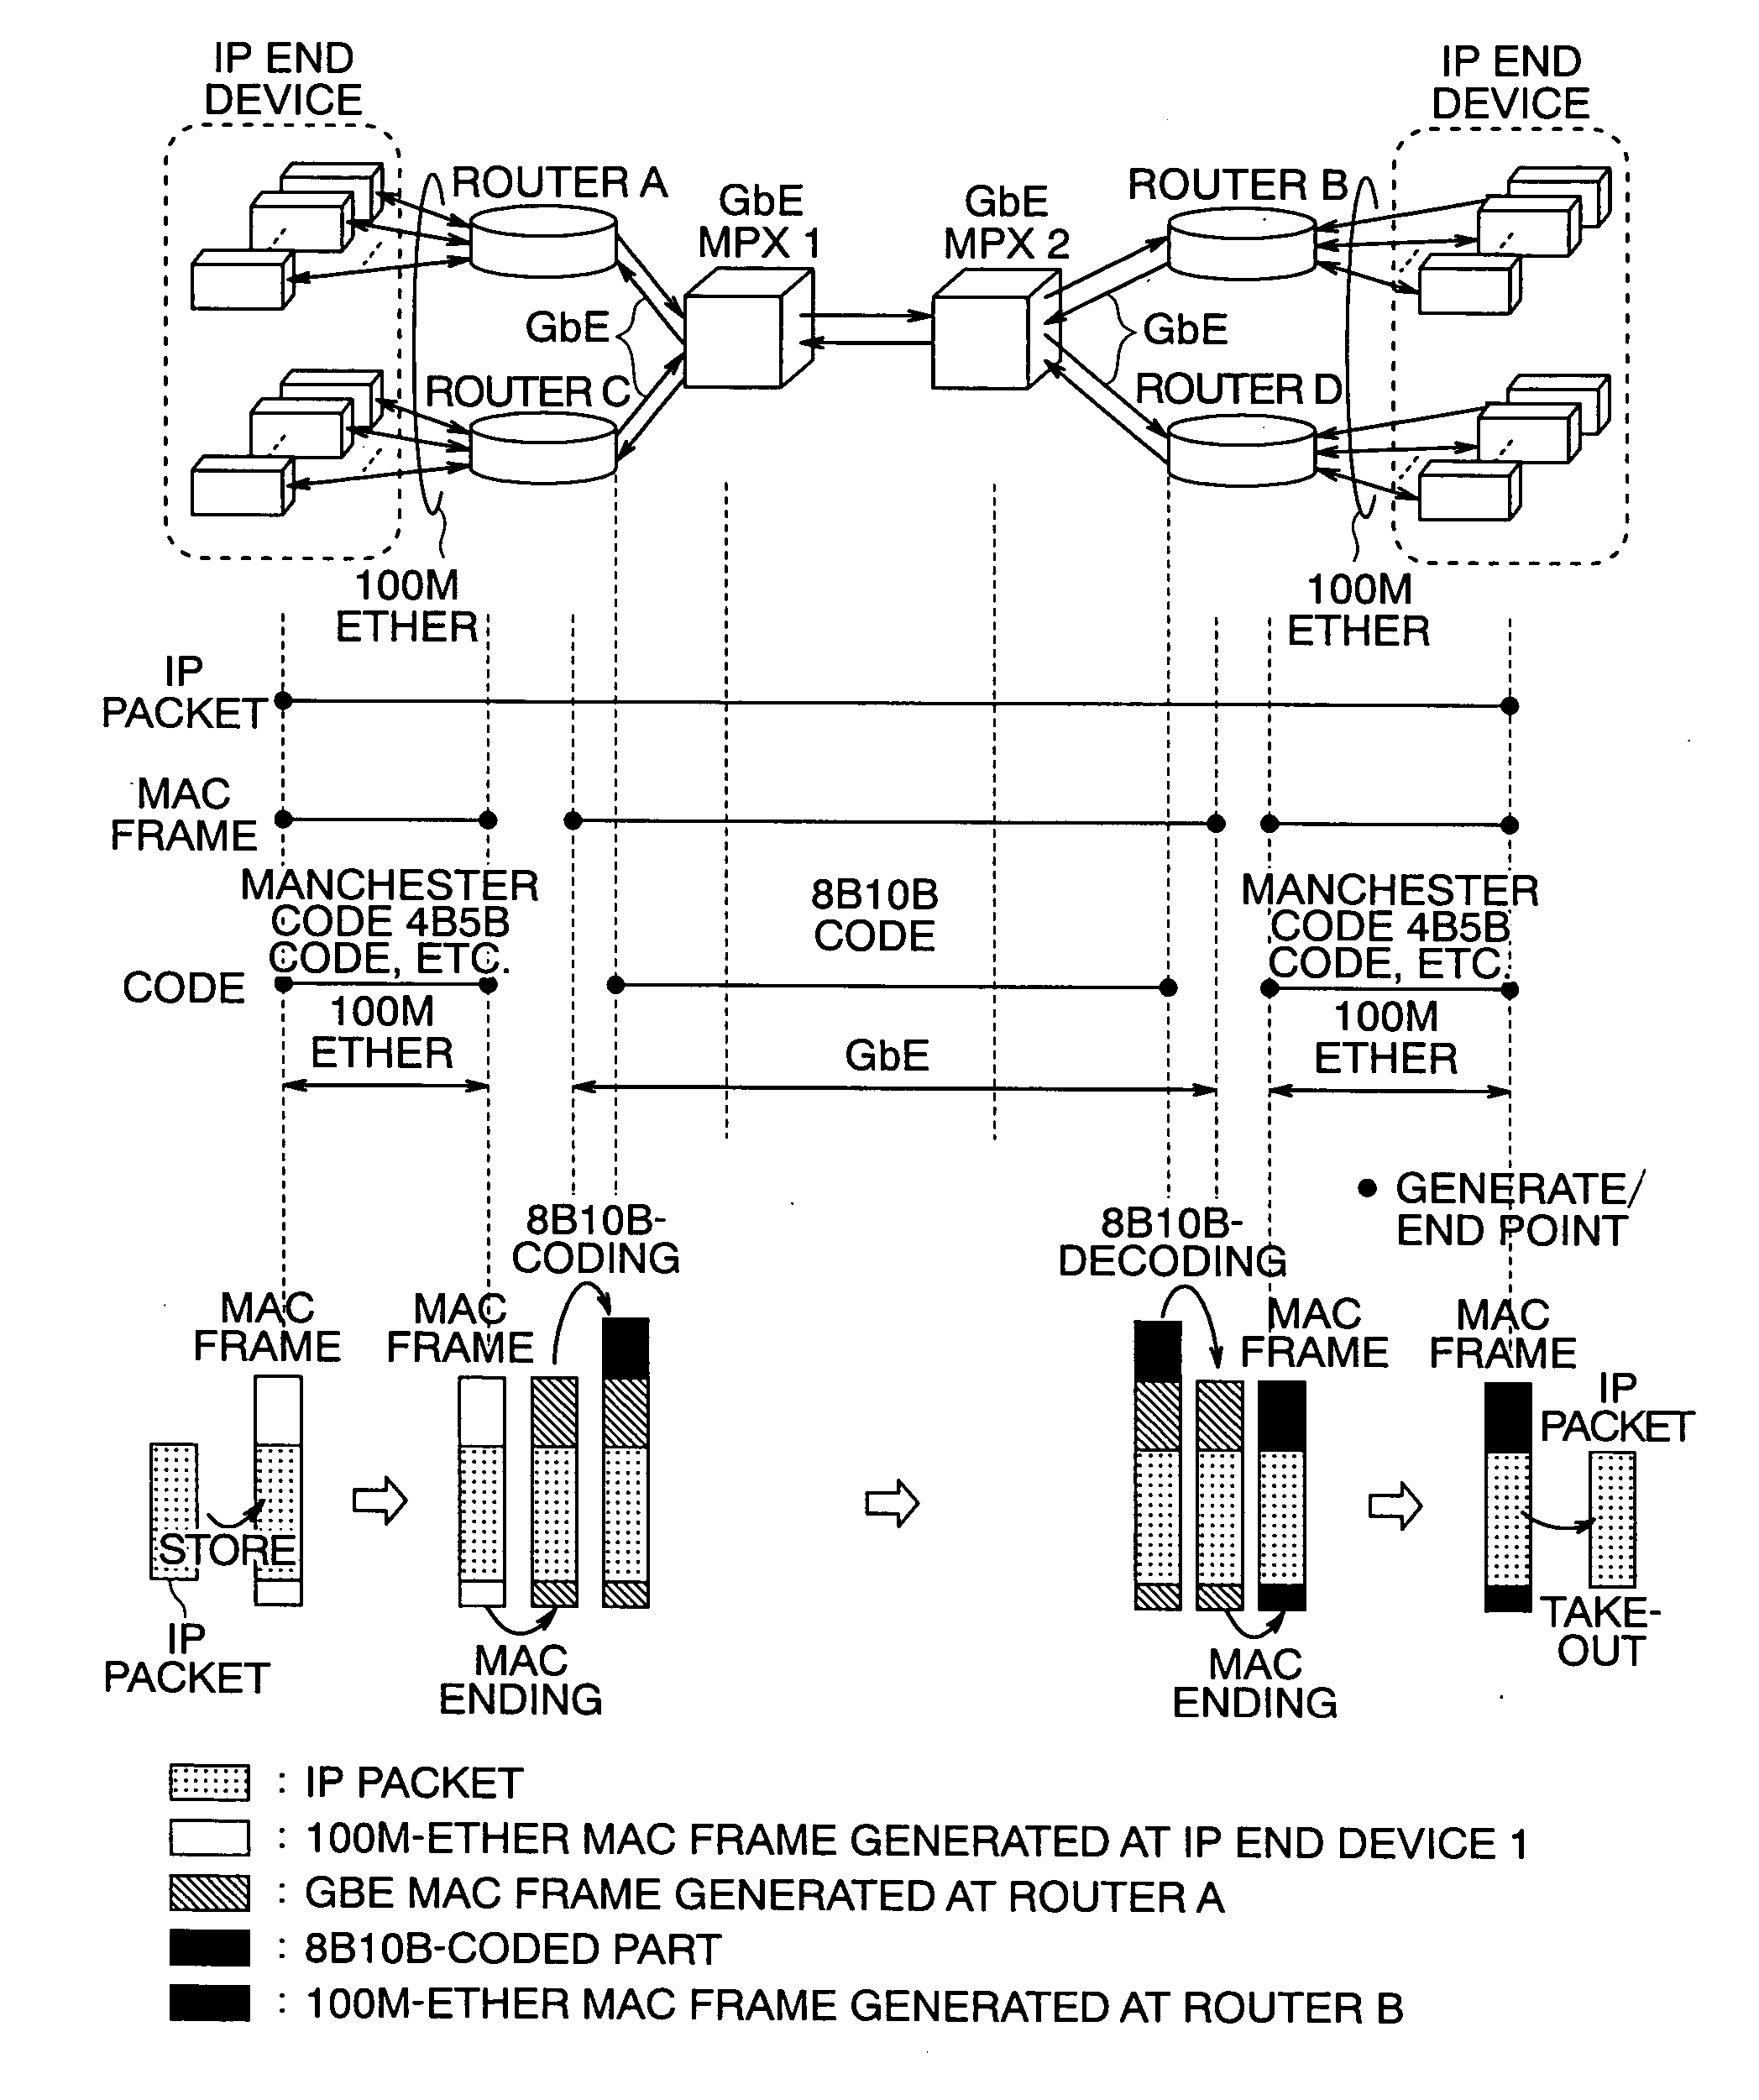 Transmission apparatus